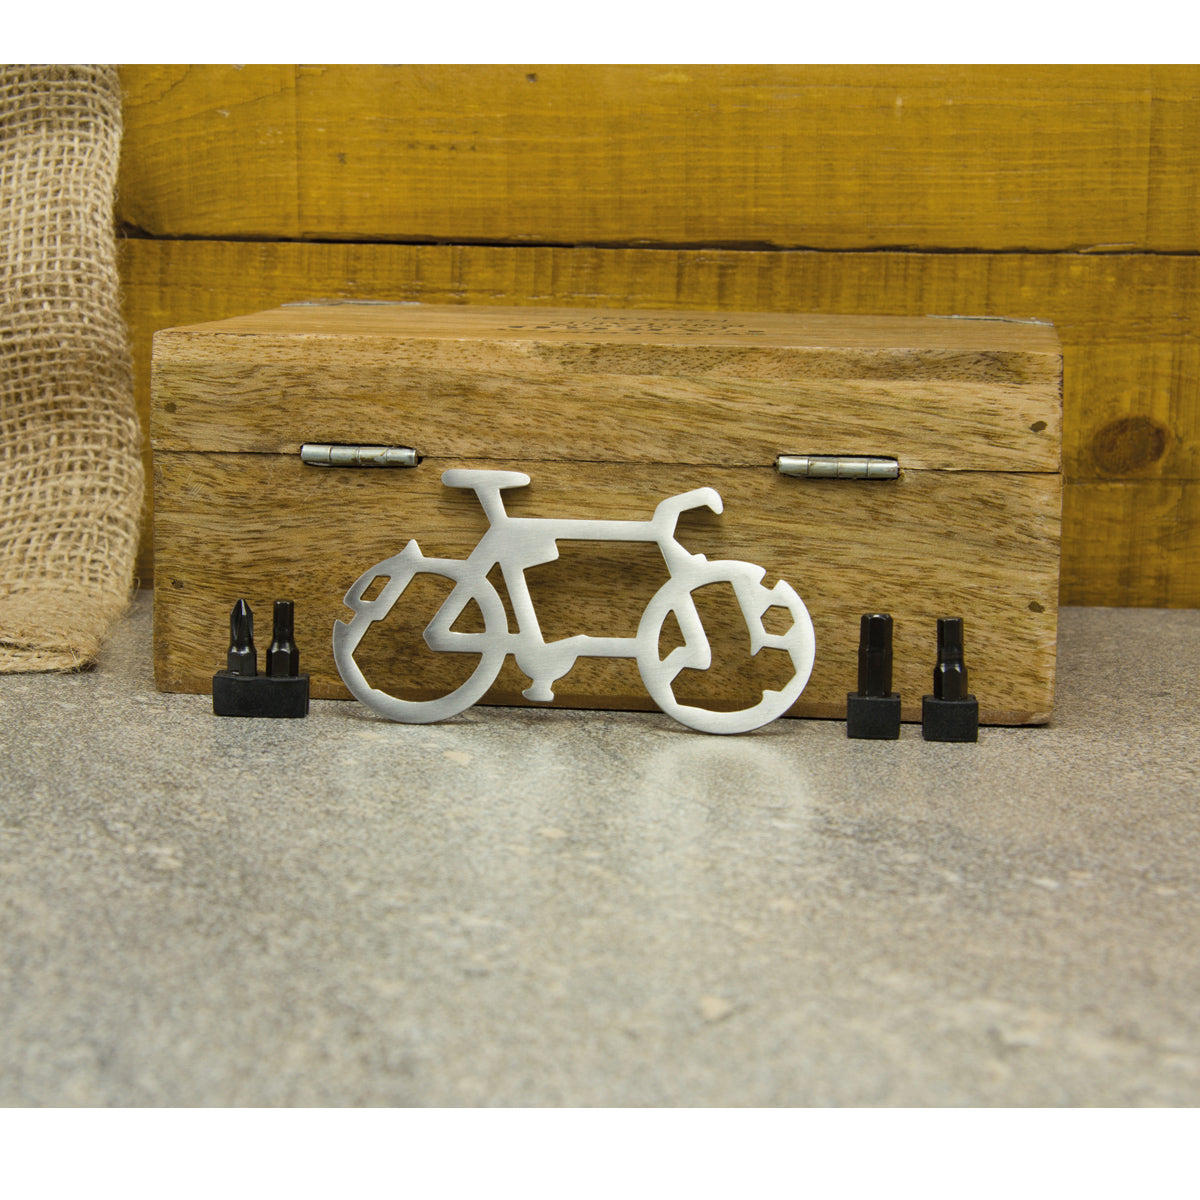 Scott /& Lawson Bike multi-tool with Pouch